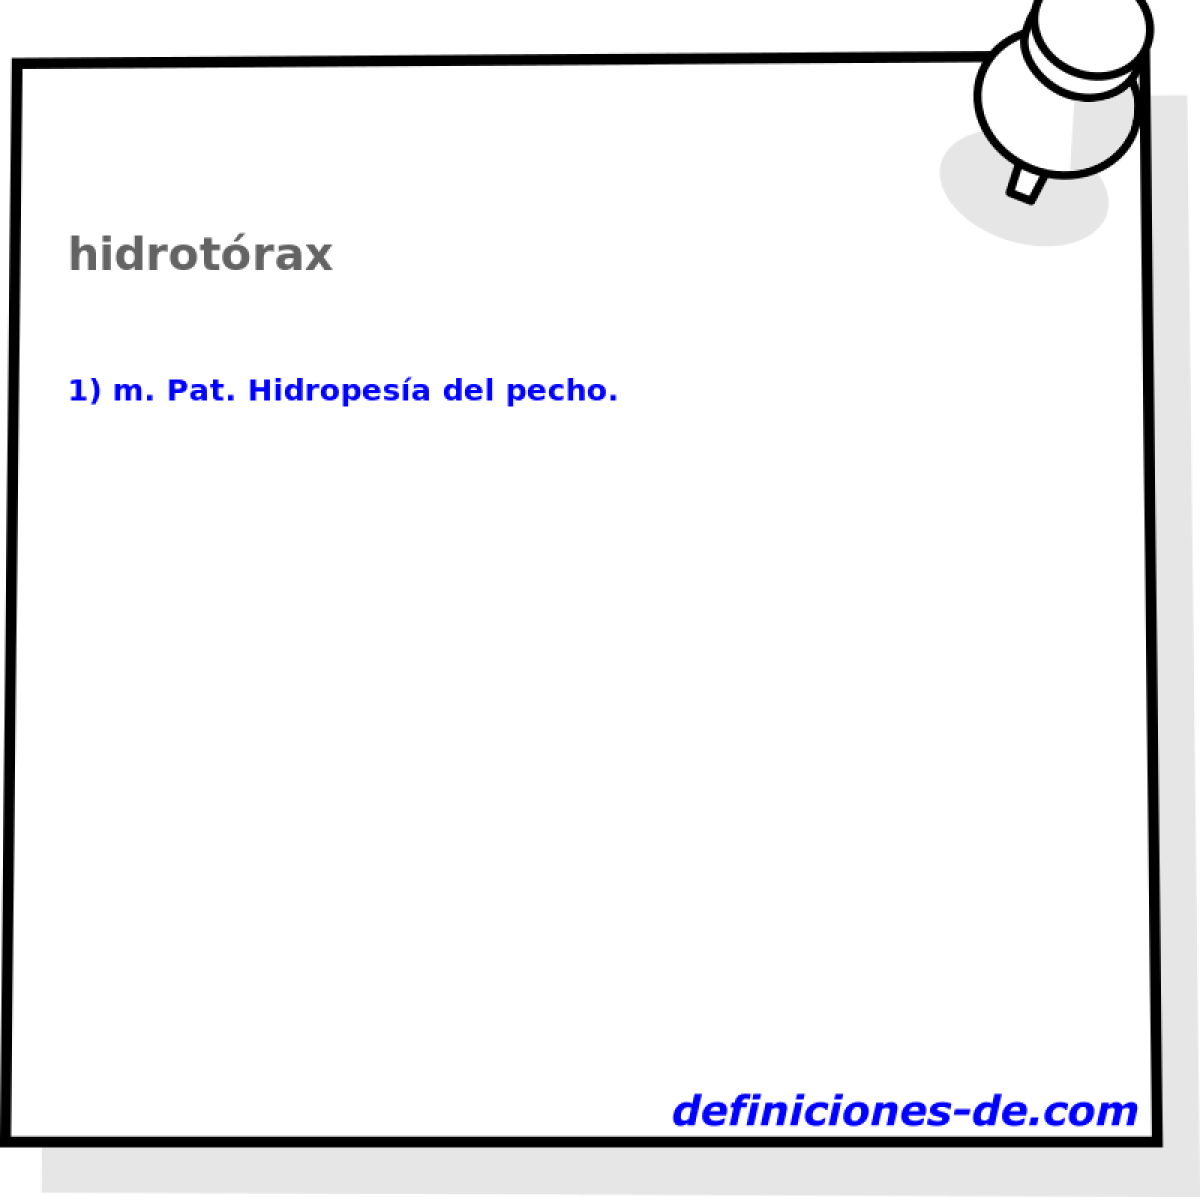 hidrotrax 